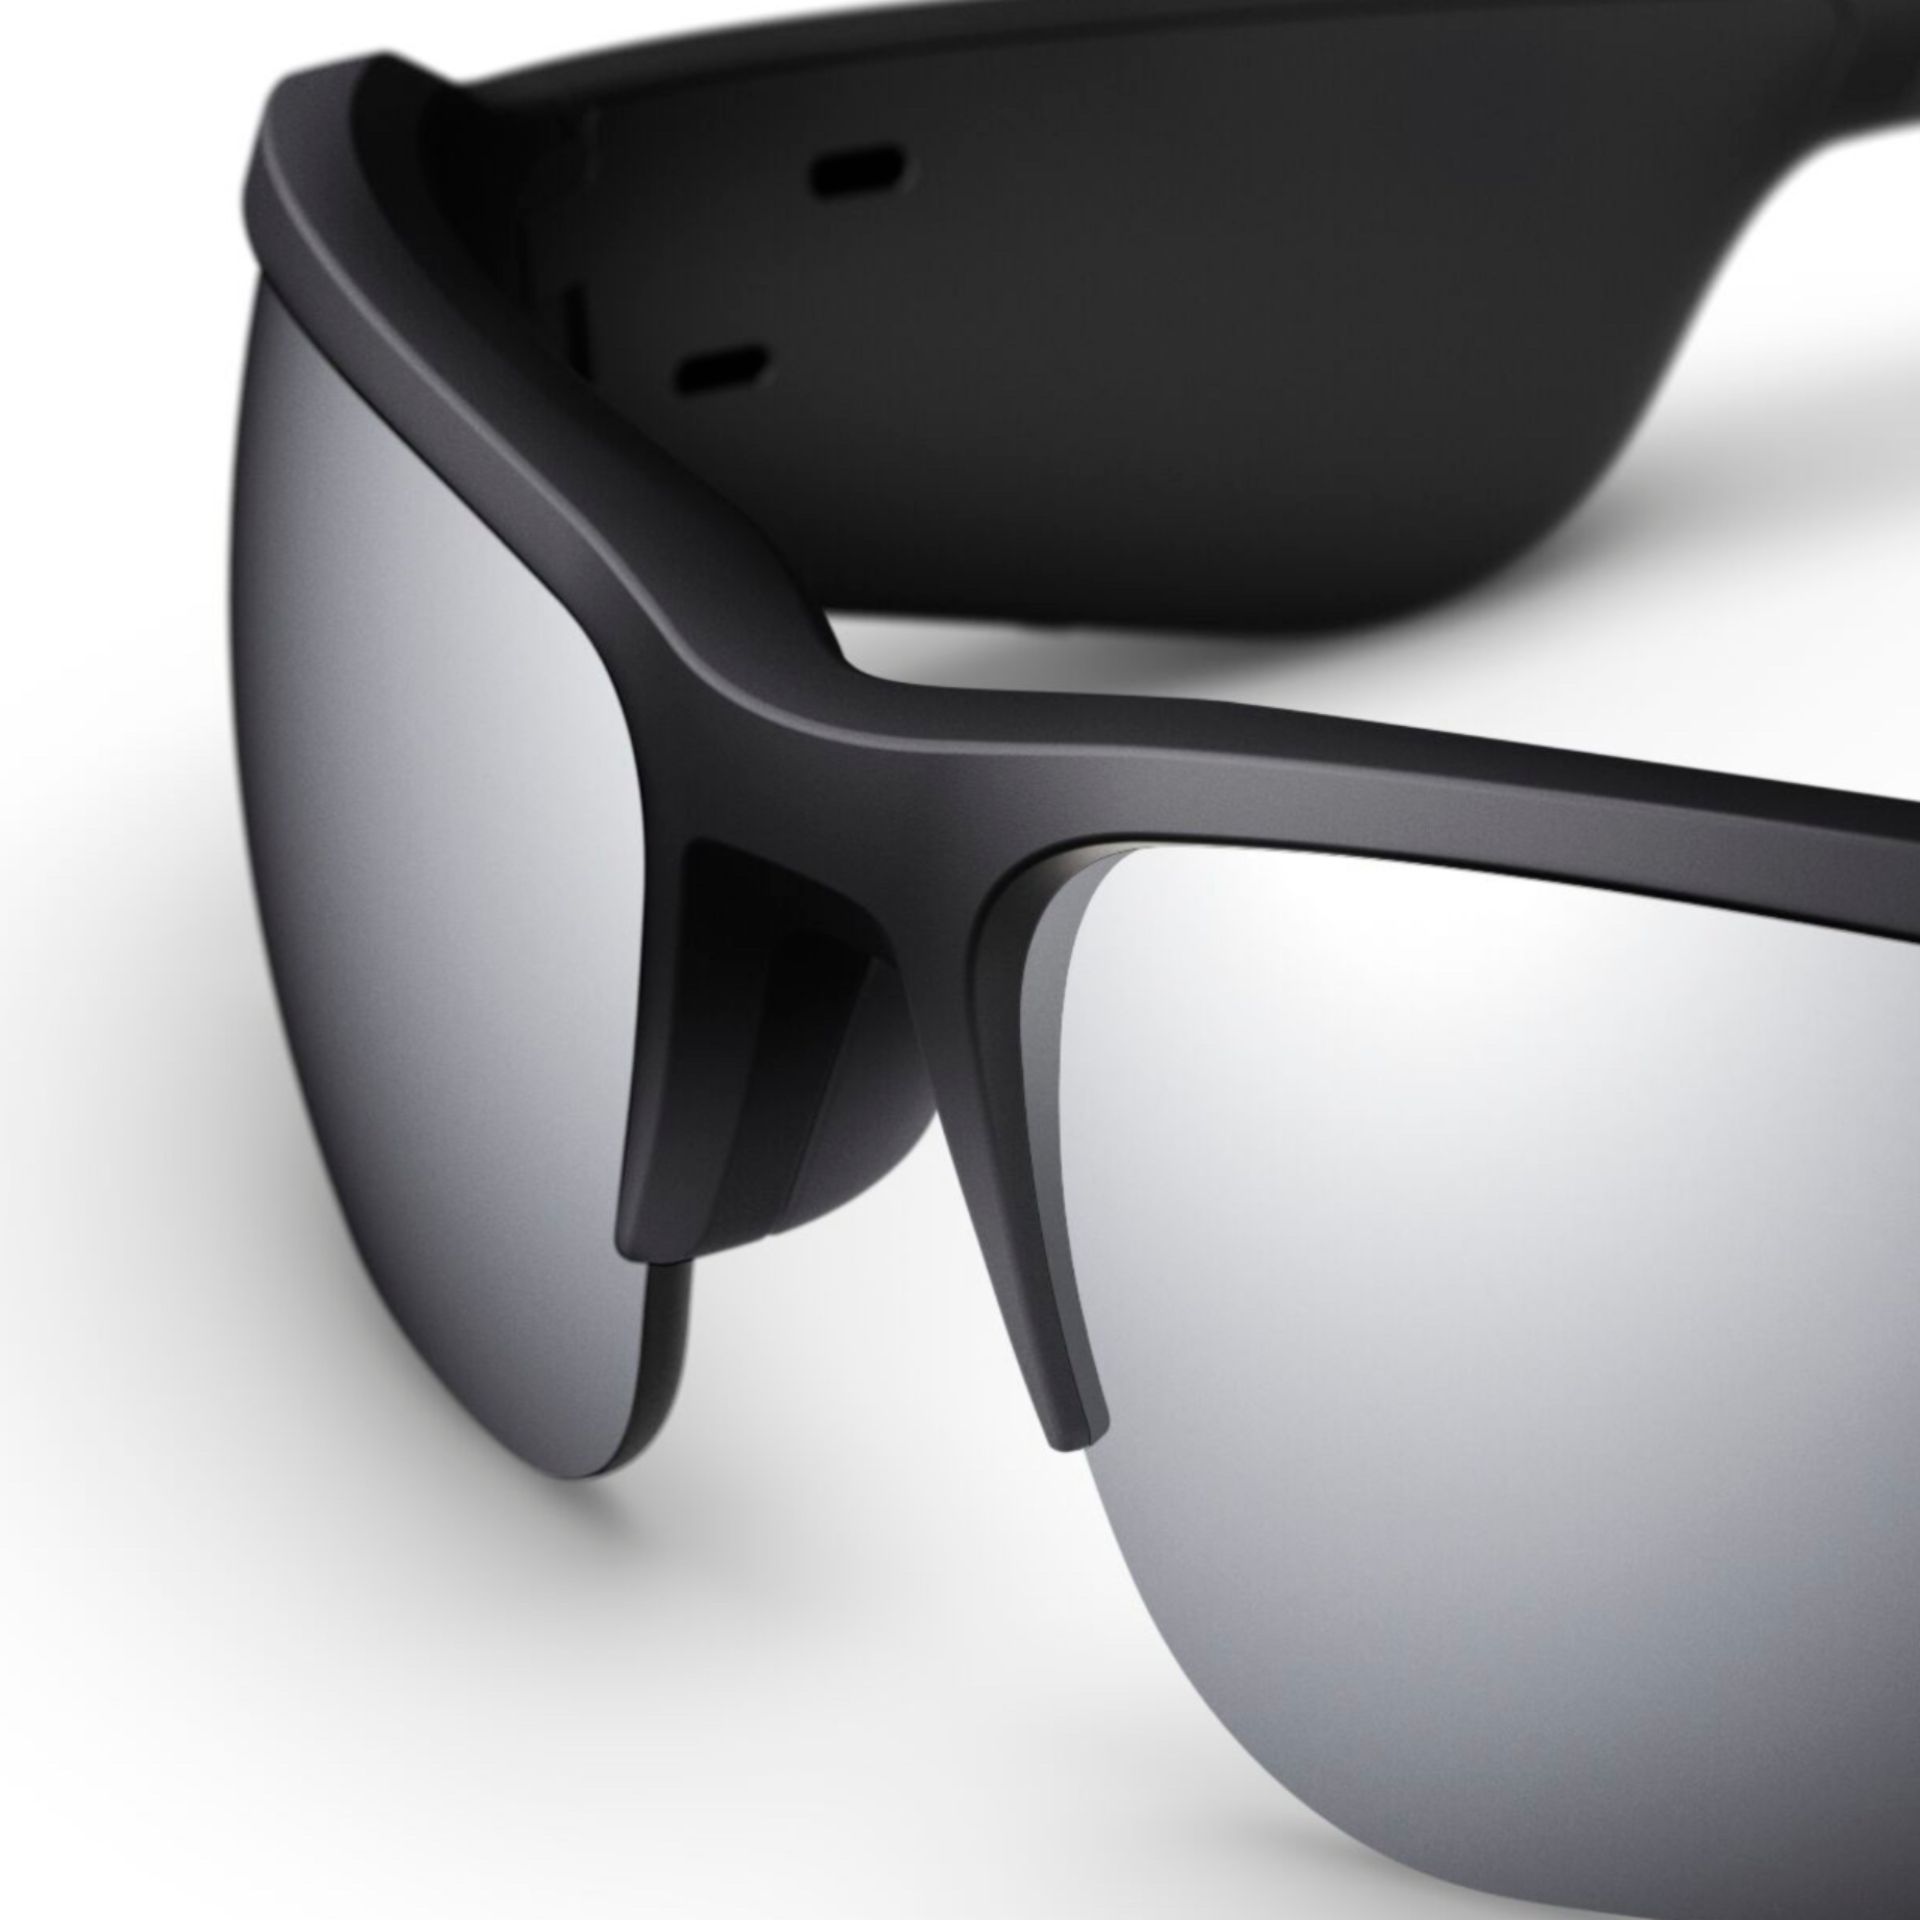 Bose Frames Tempo – Sports Audio Sunglasses with Polarized Lenses 